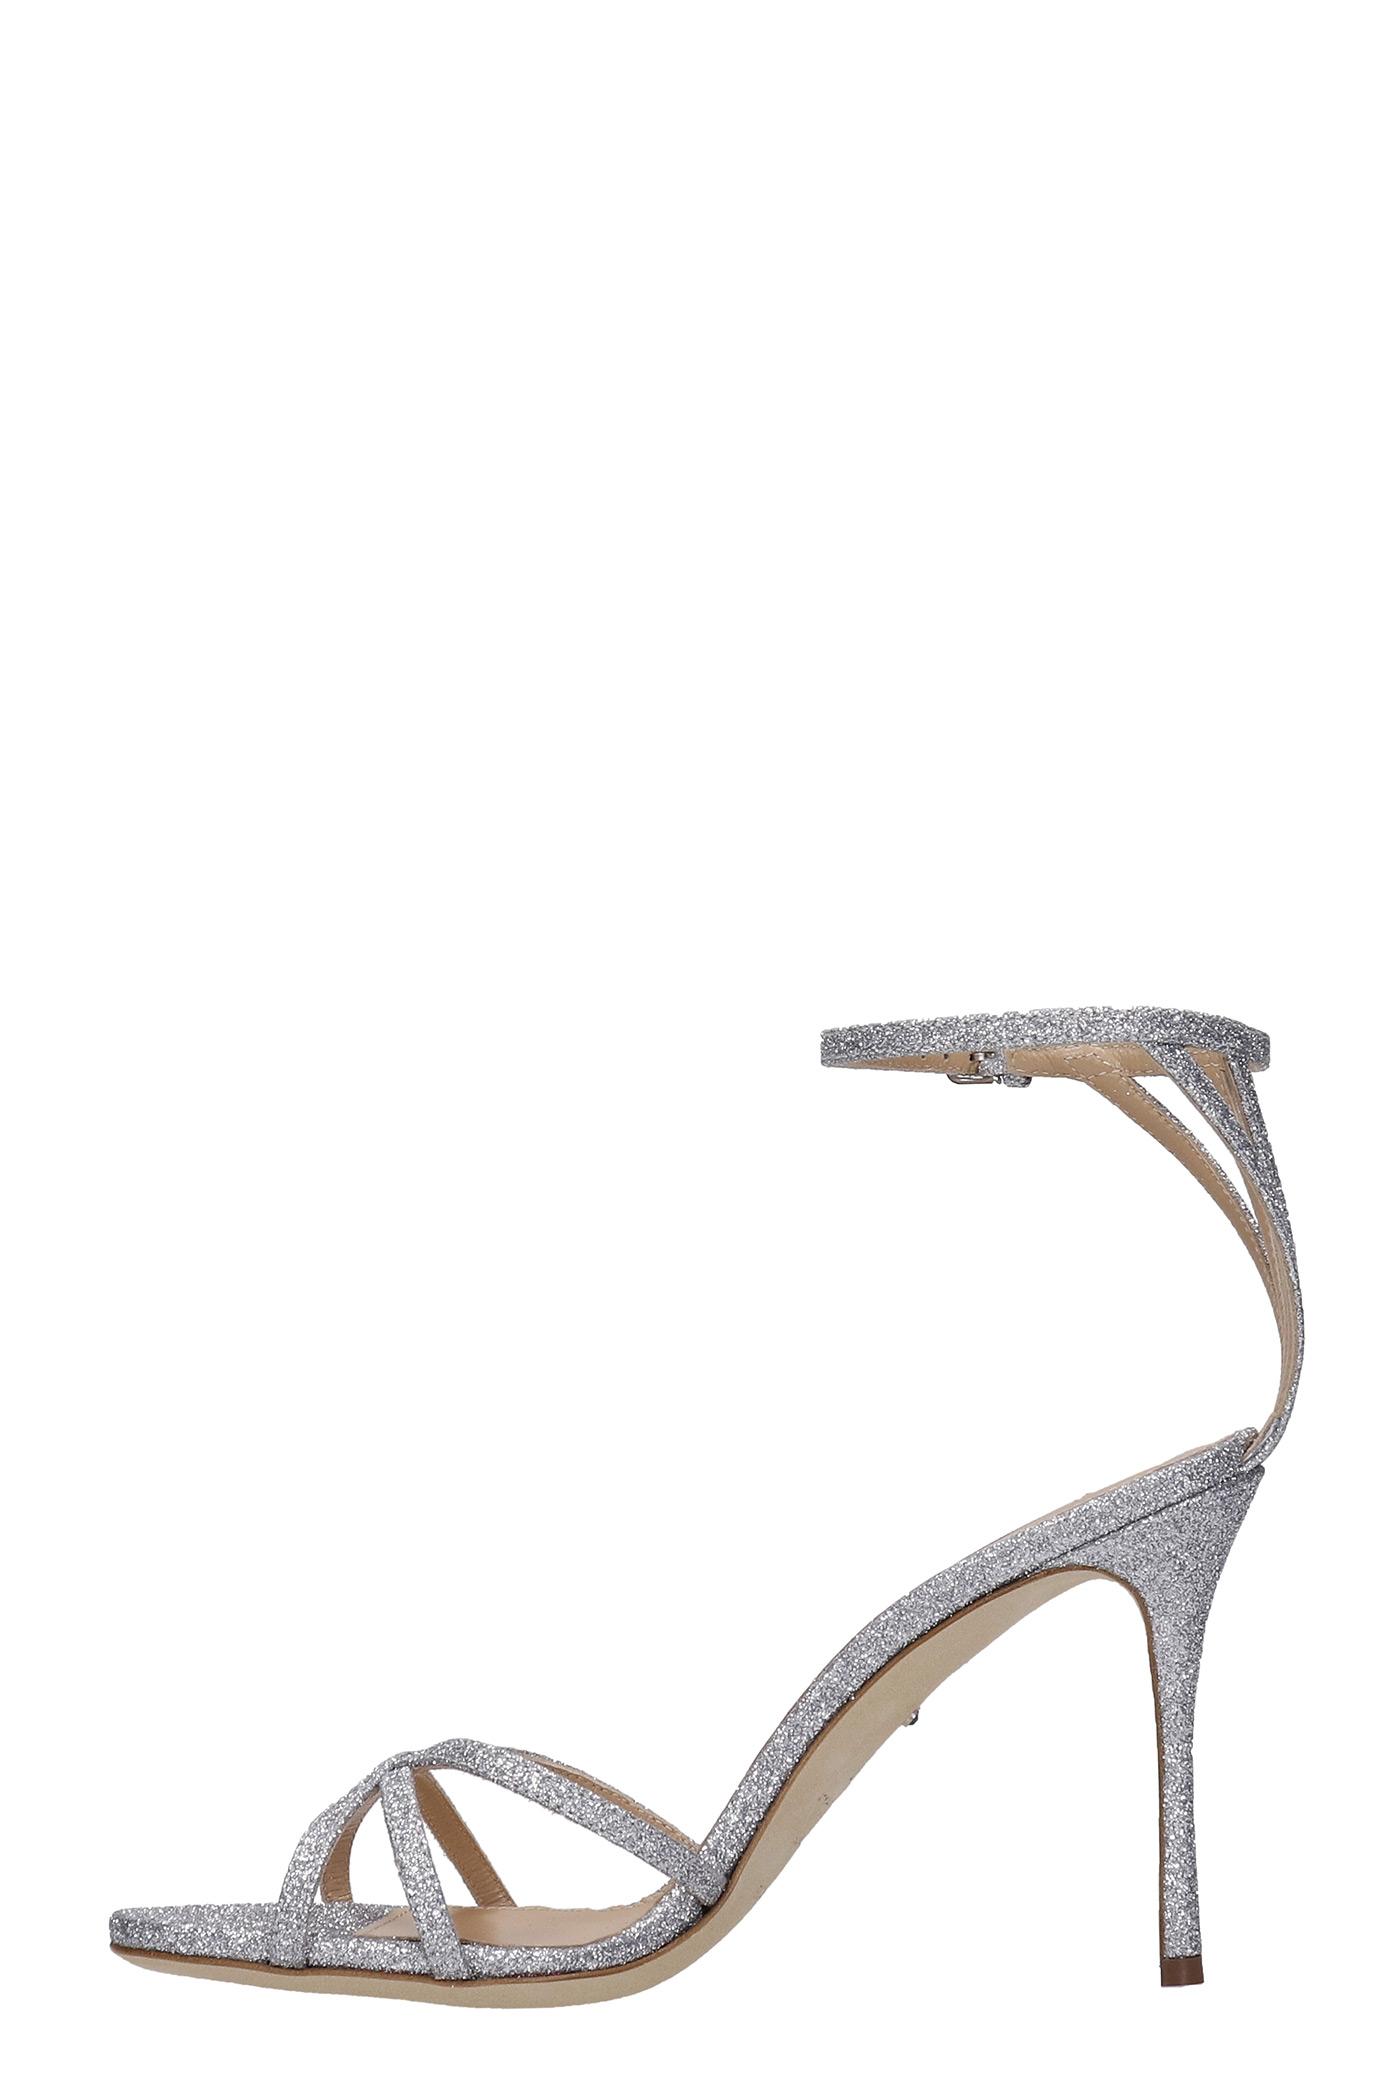 Sergio Rossi Sandals In Silver Glitter in Metallic | Lyst